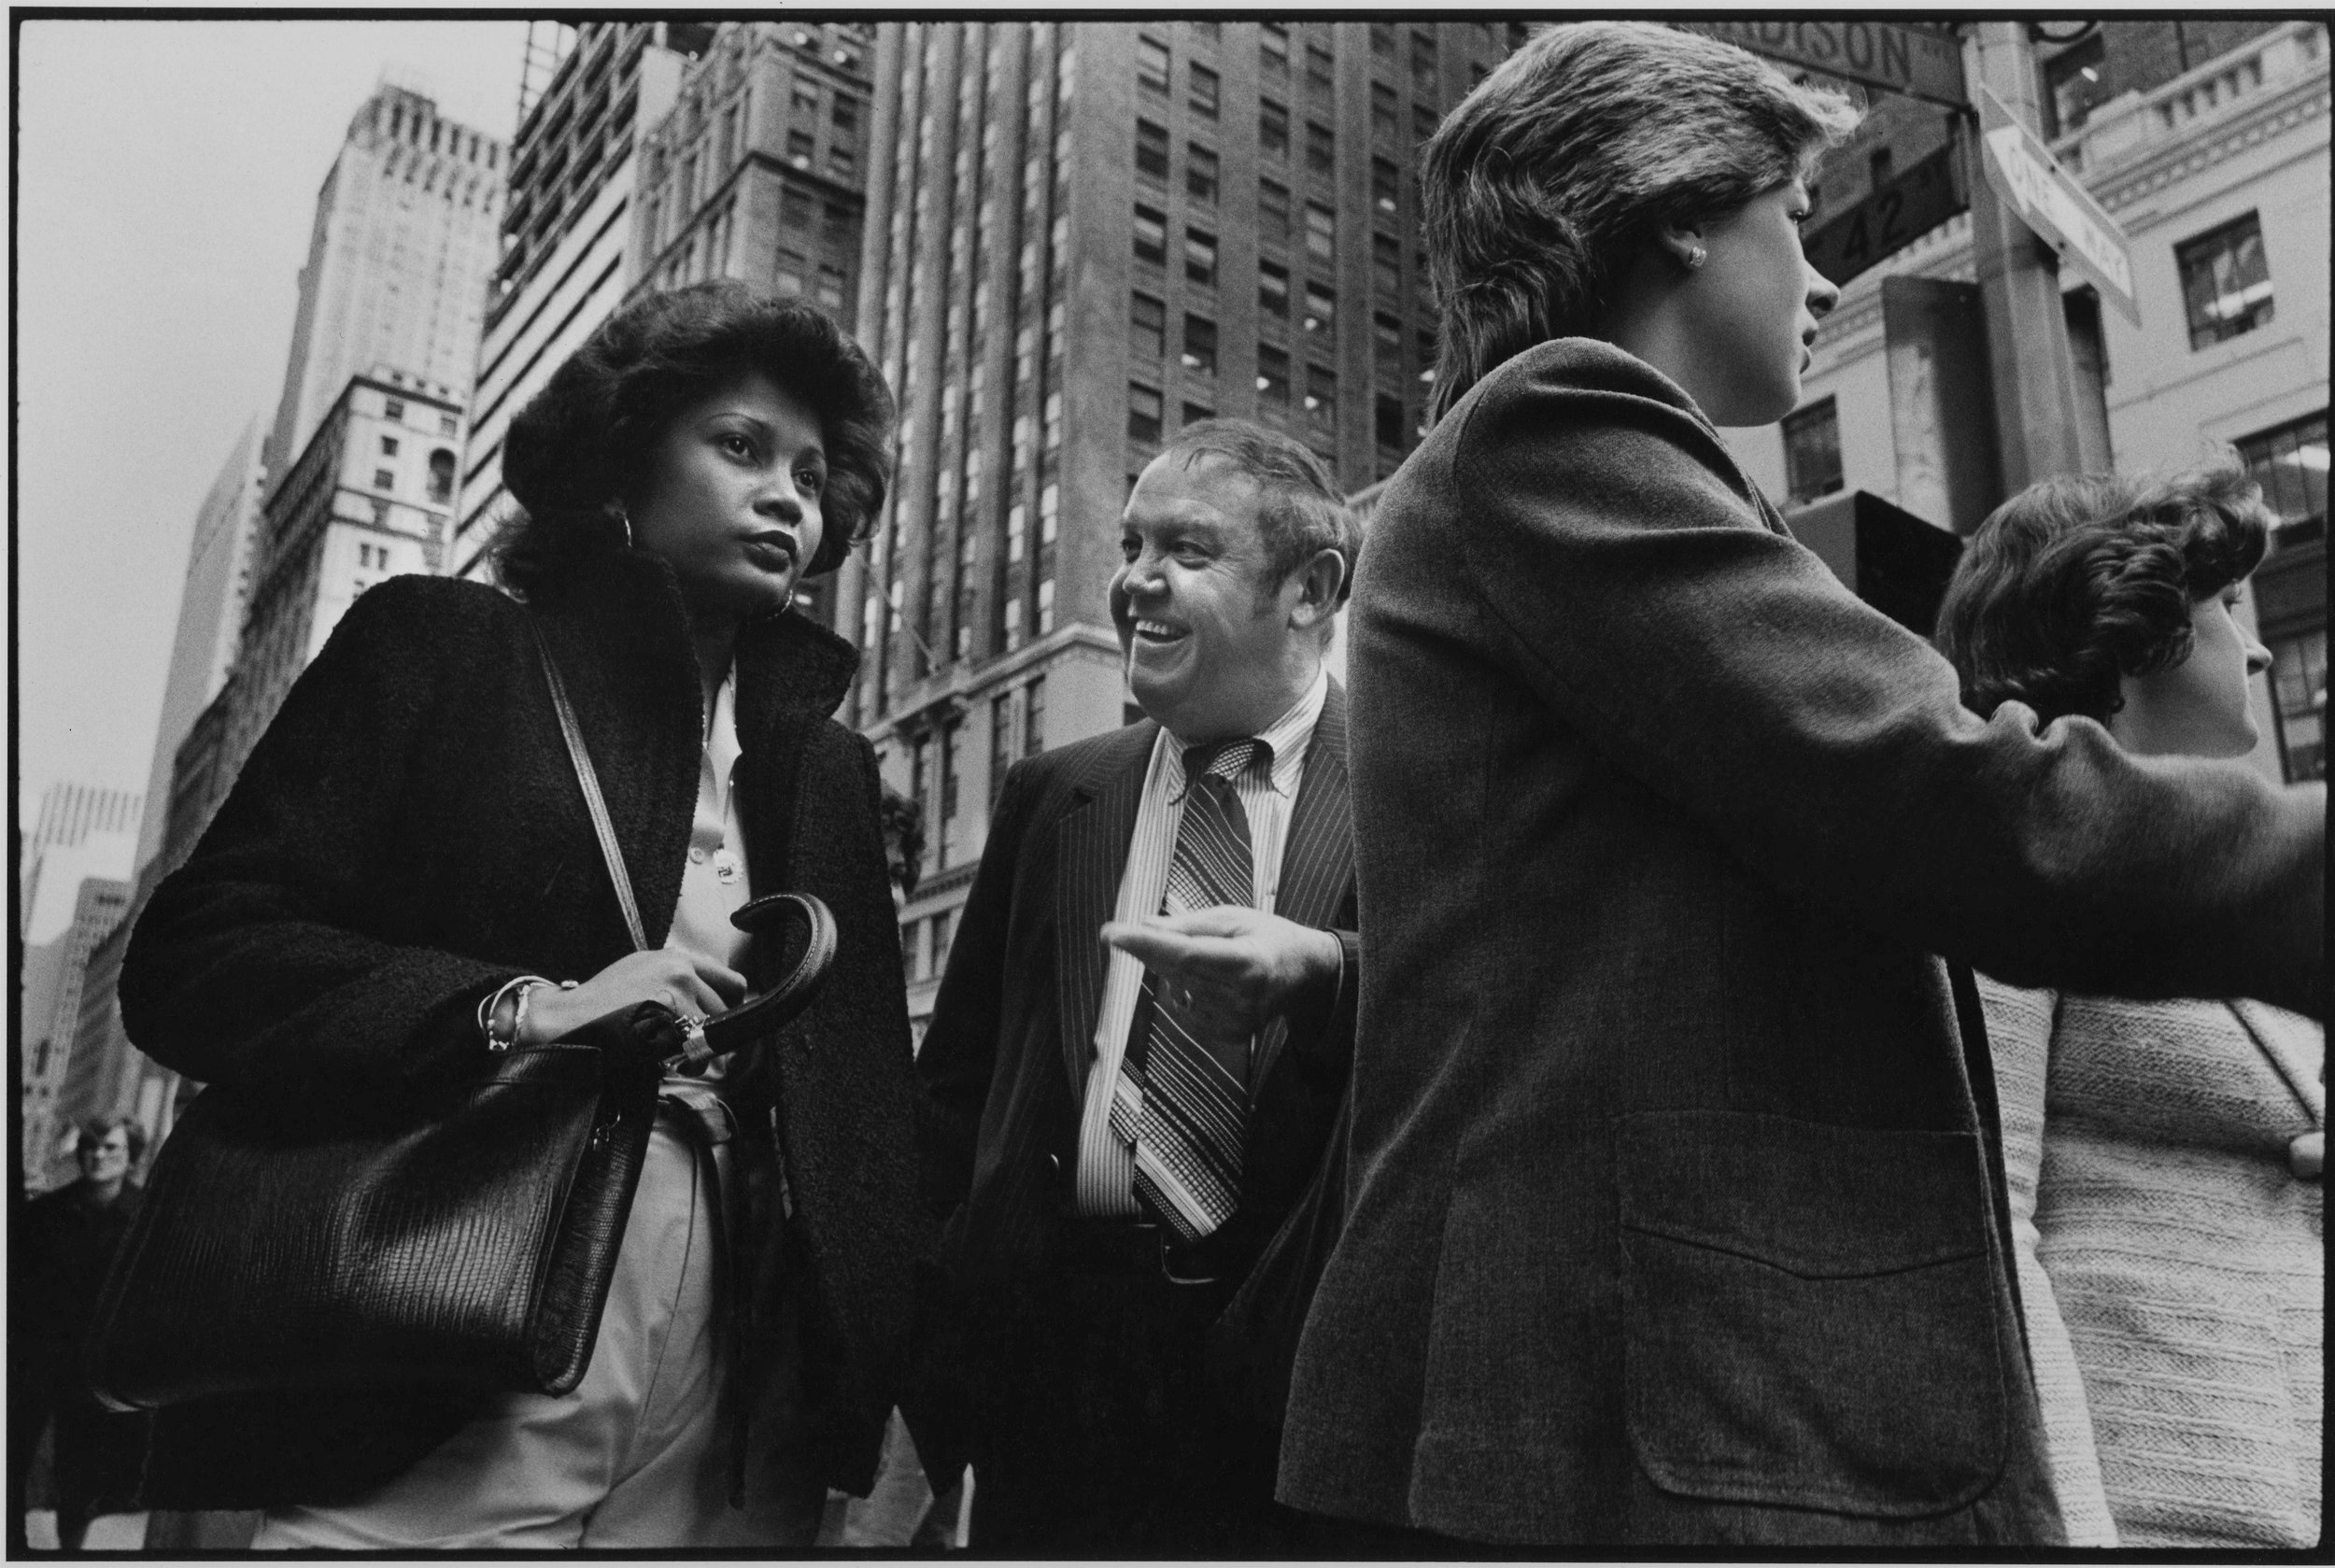 goofy white guy, stoney faced black woman, 42nd st., nyc, c. 1981